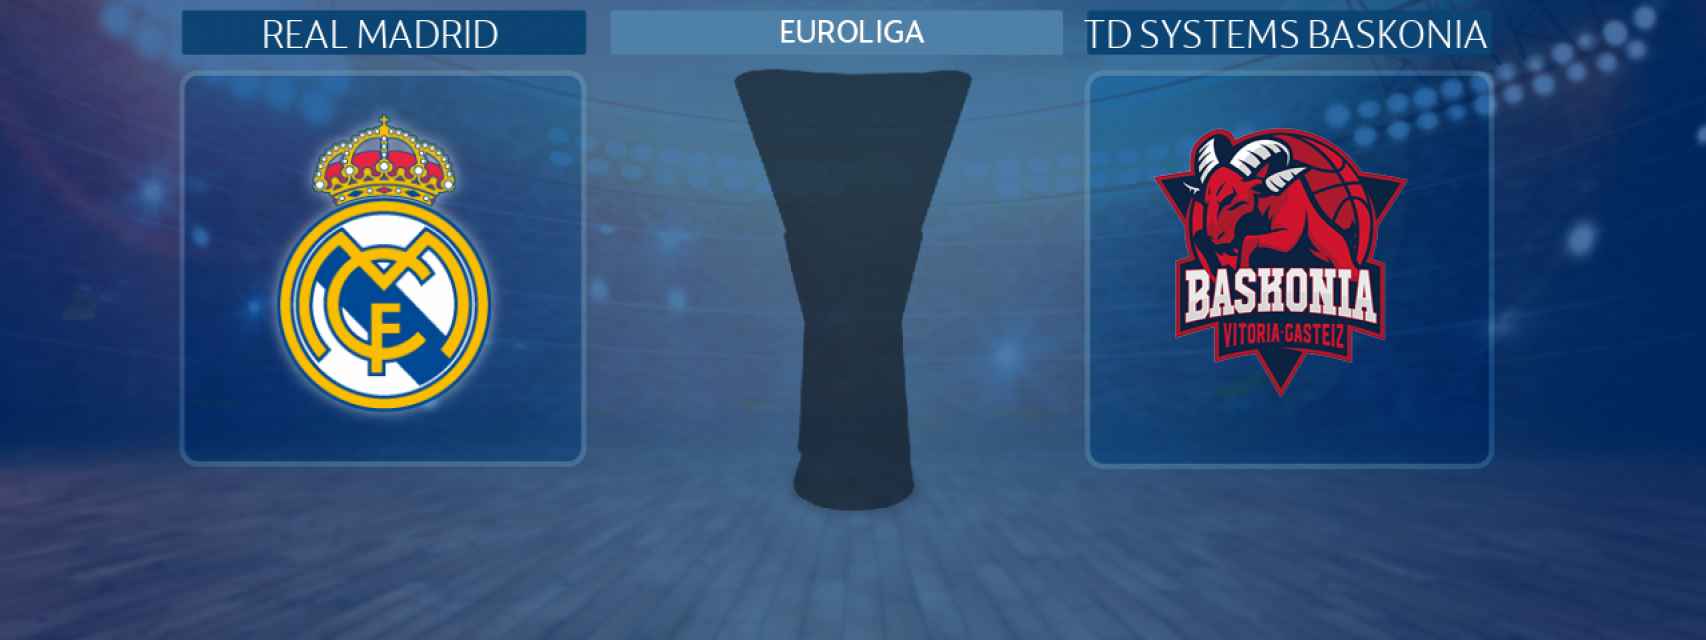 Real Madrid - TD Systems Baskonia, partido de la Euroliga